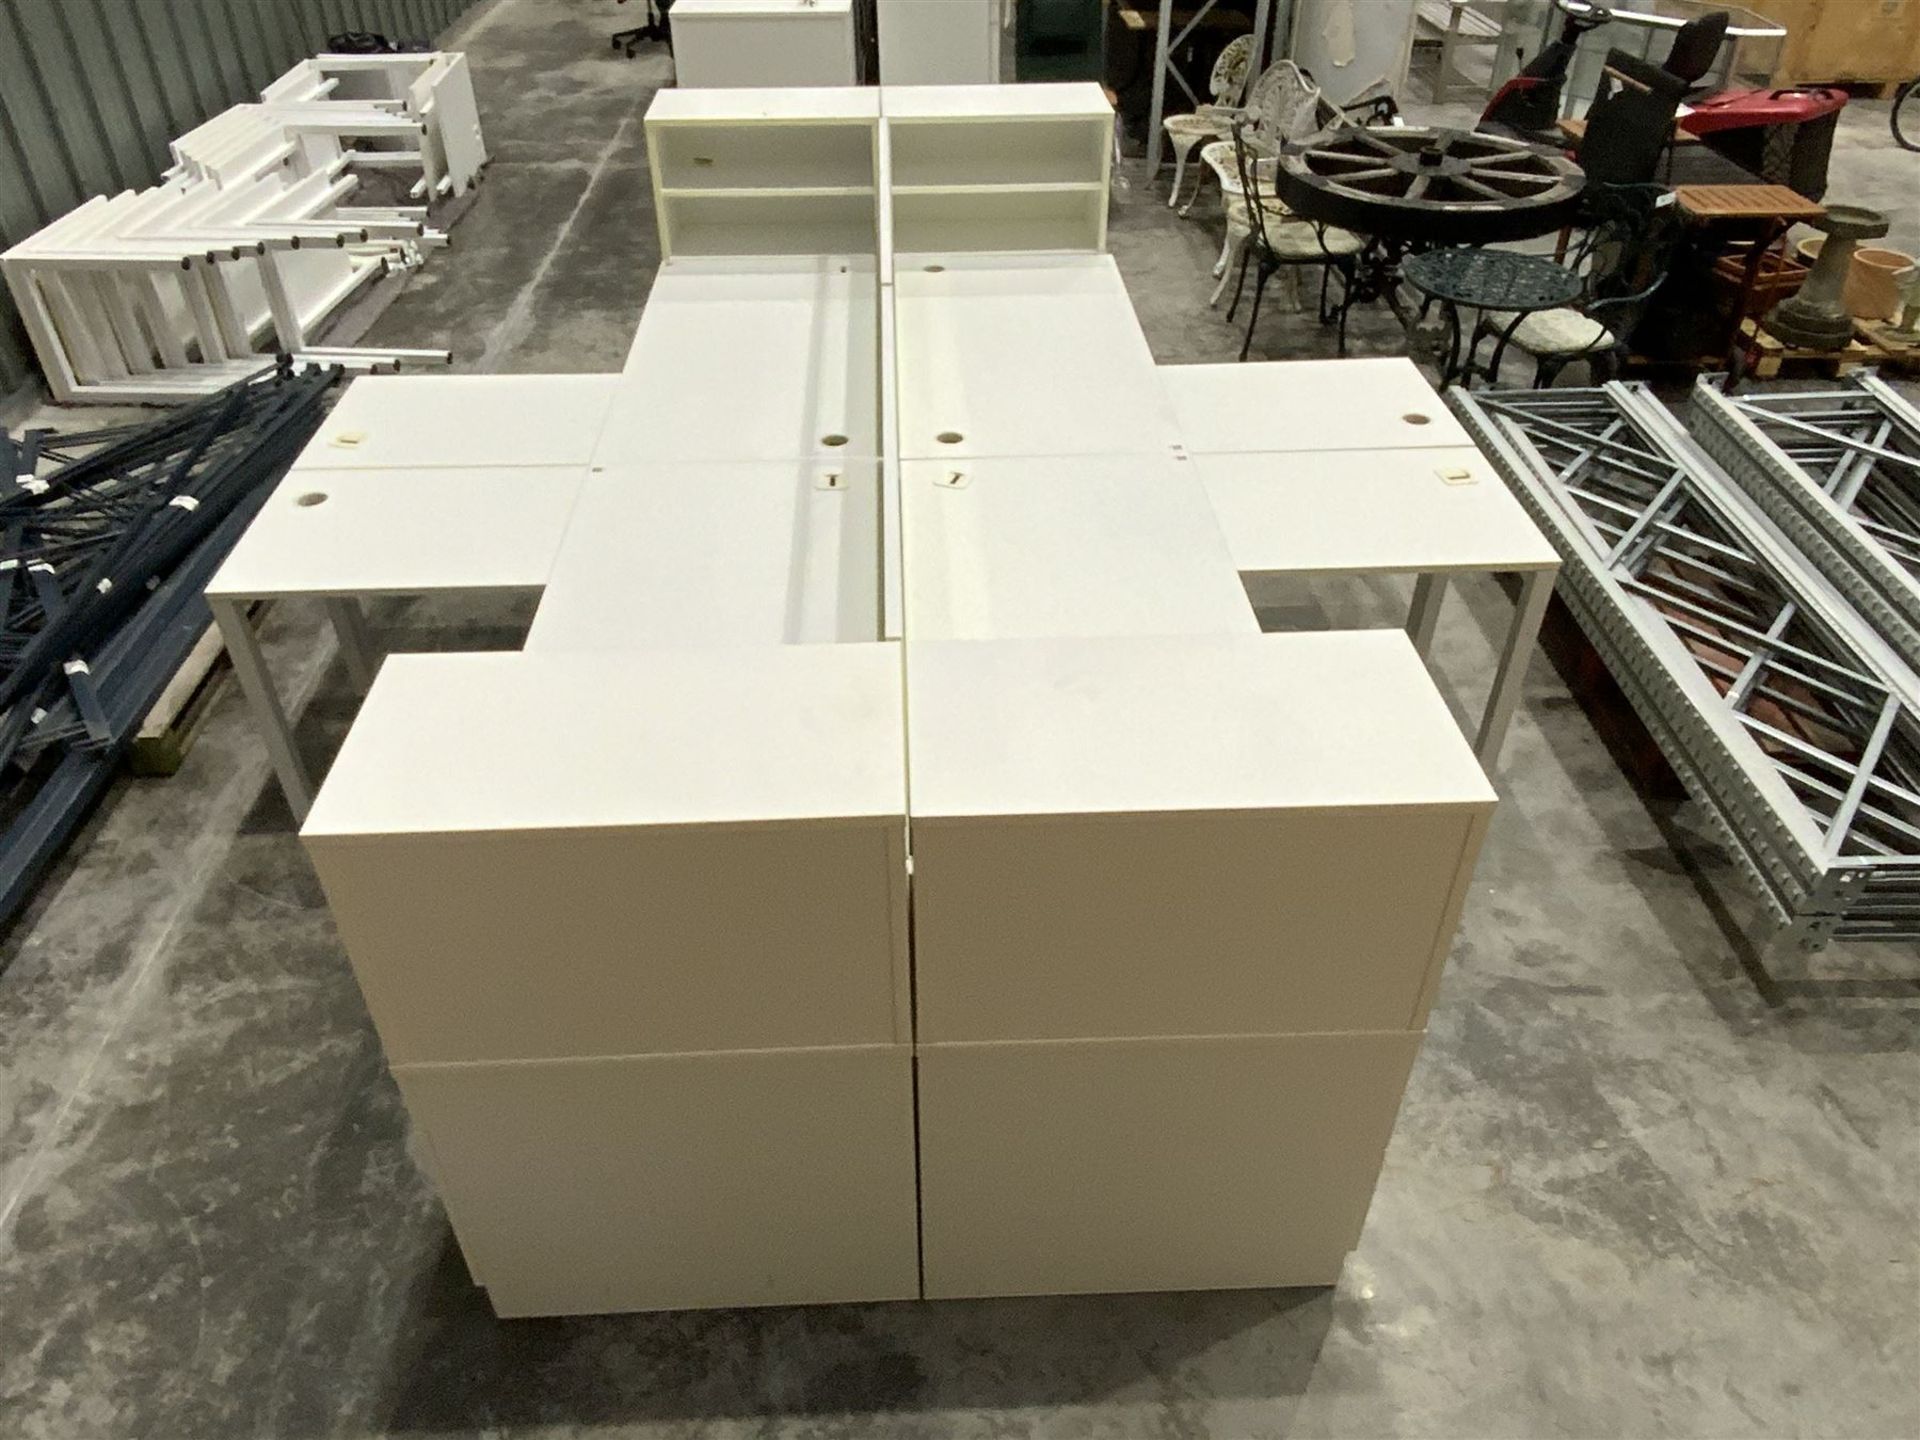 Modular two desk office system - comprising two desks - Image 3 of 6